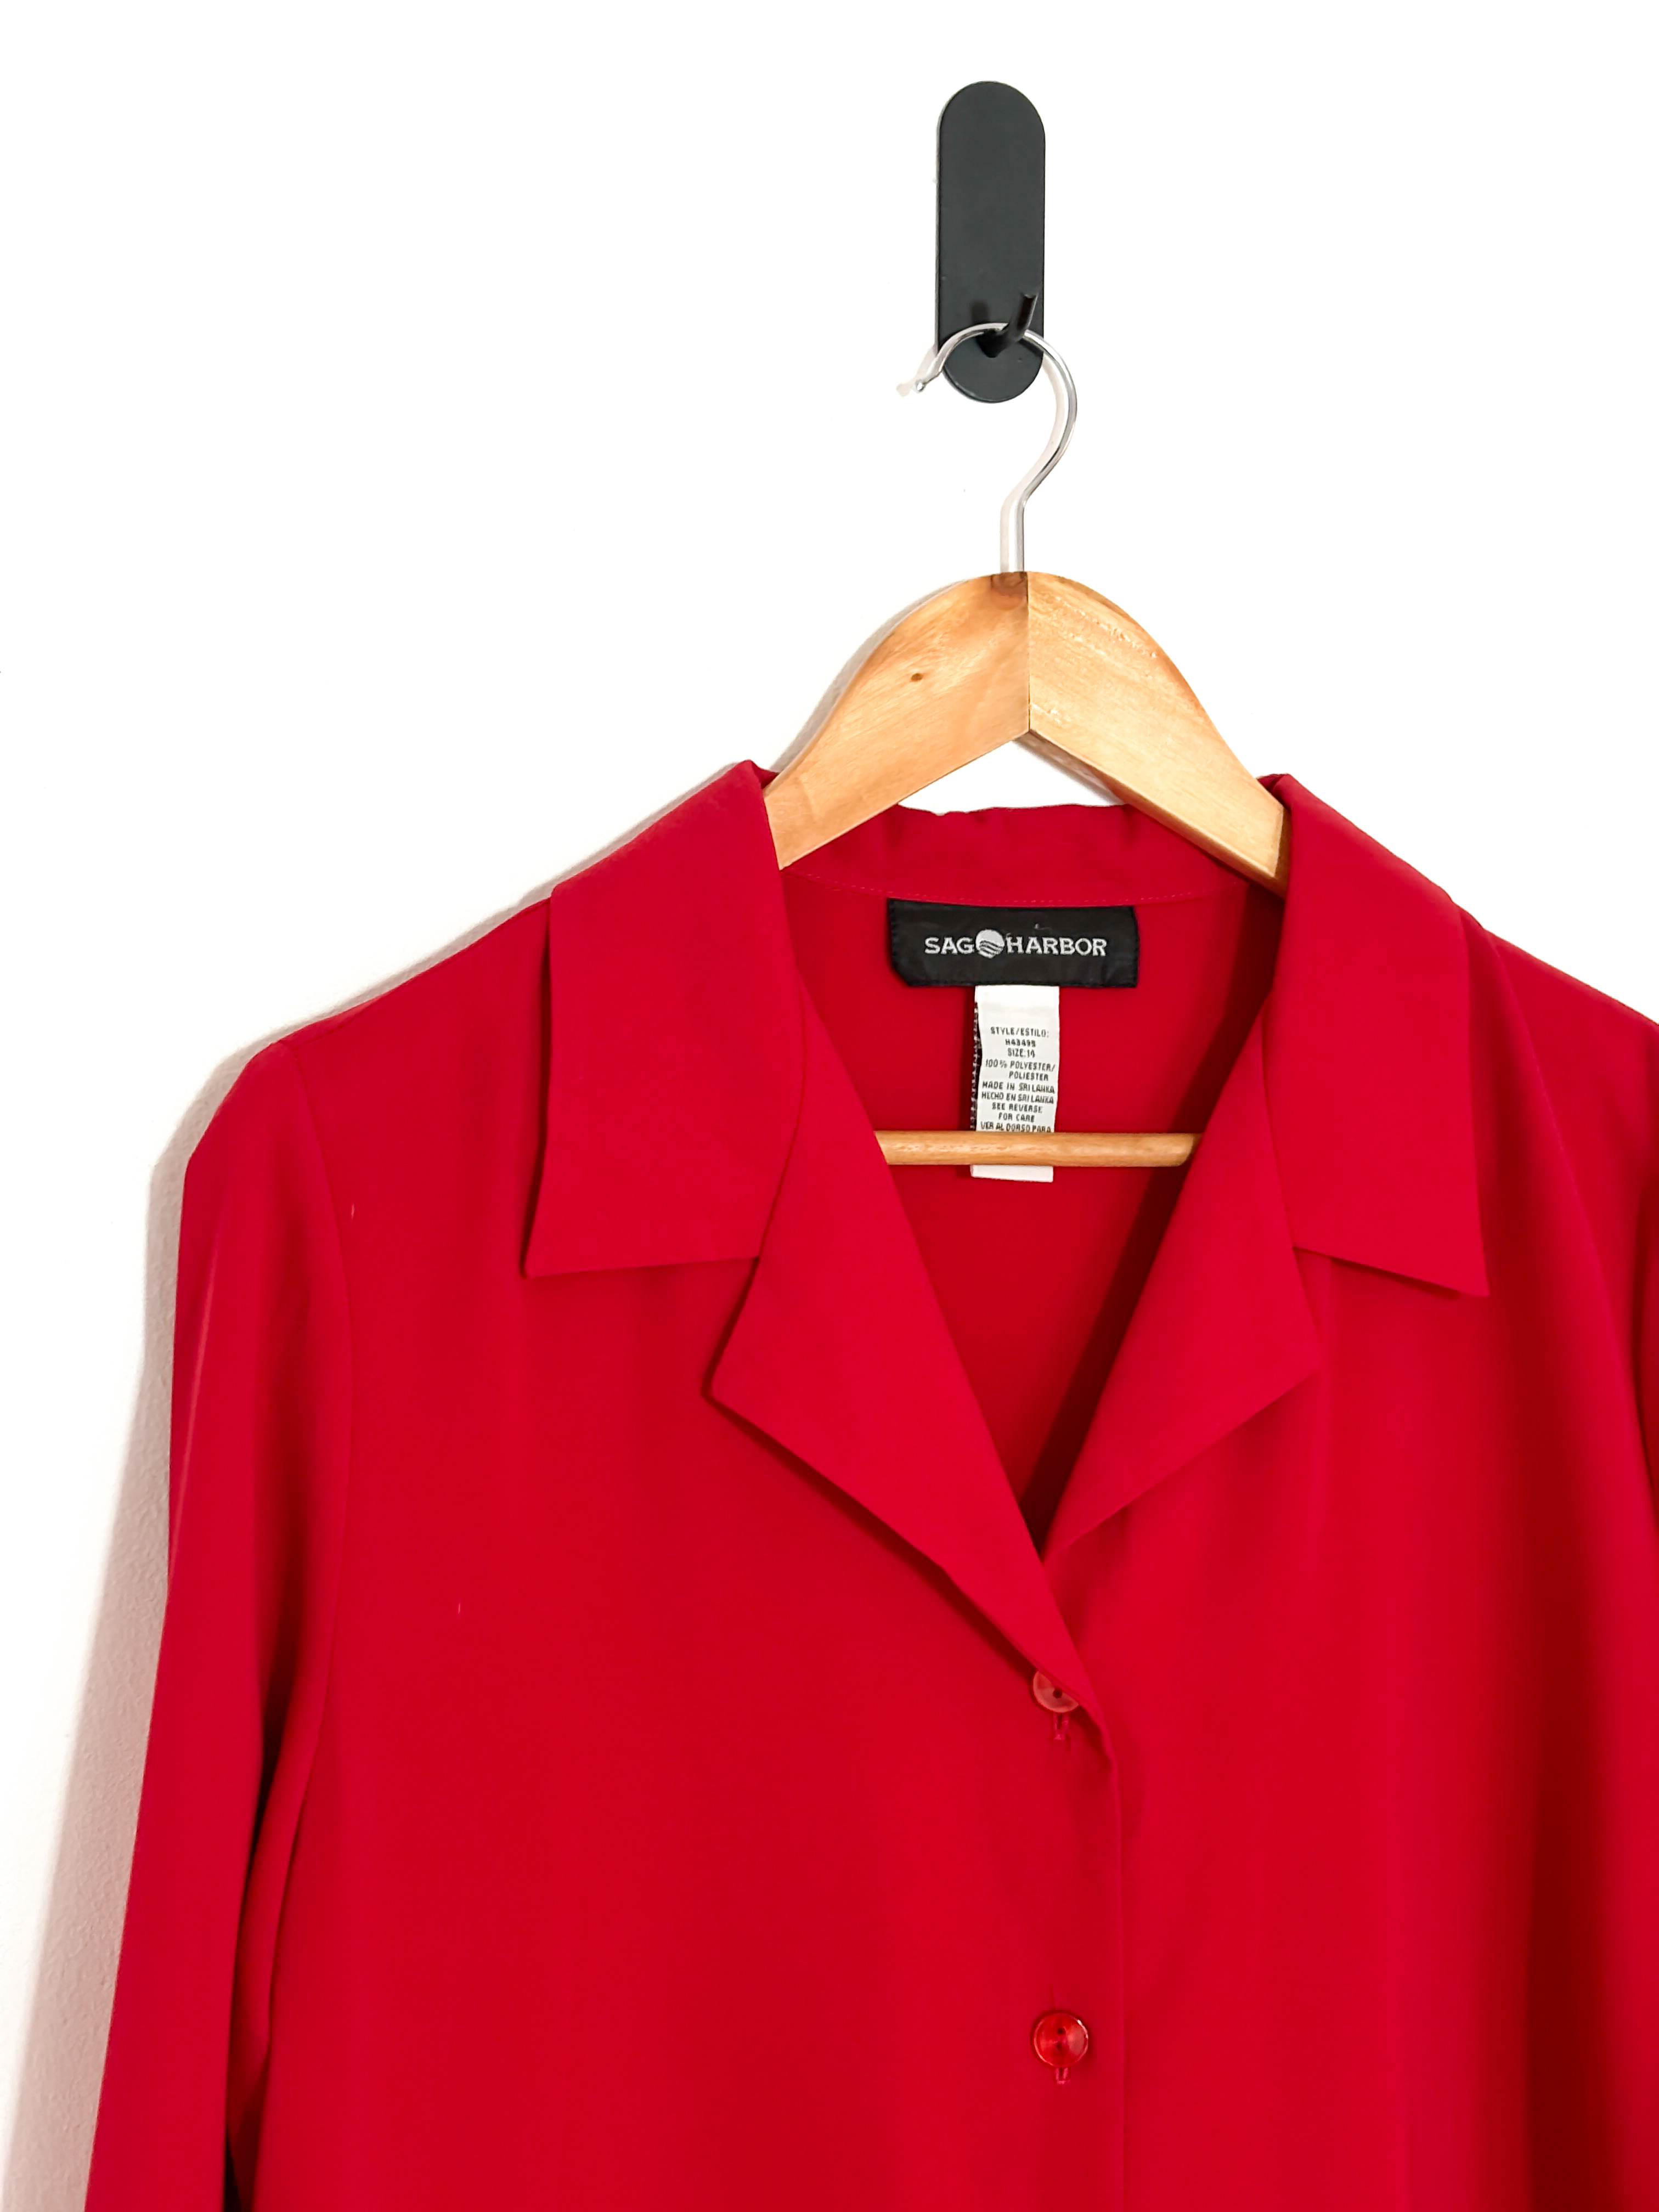 Blusa roja formal vintage